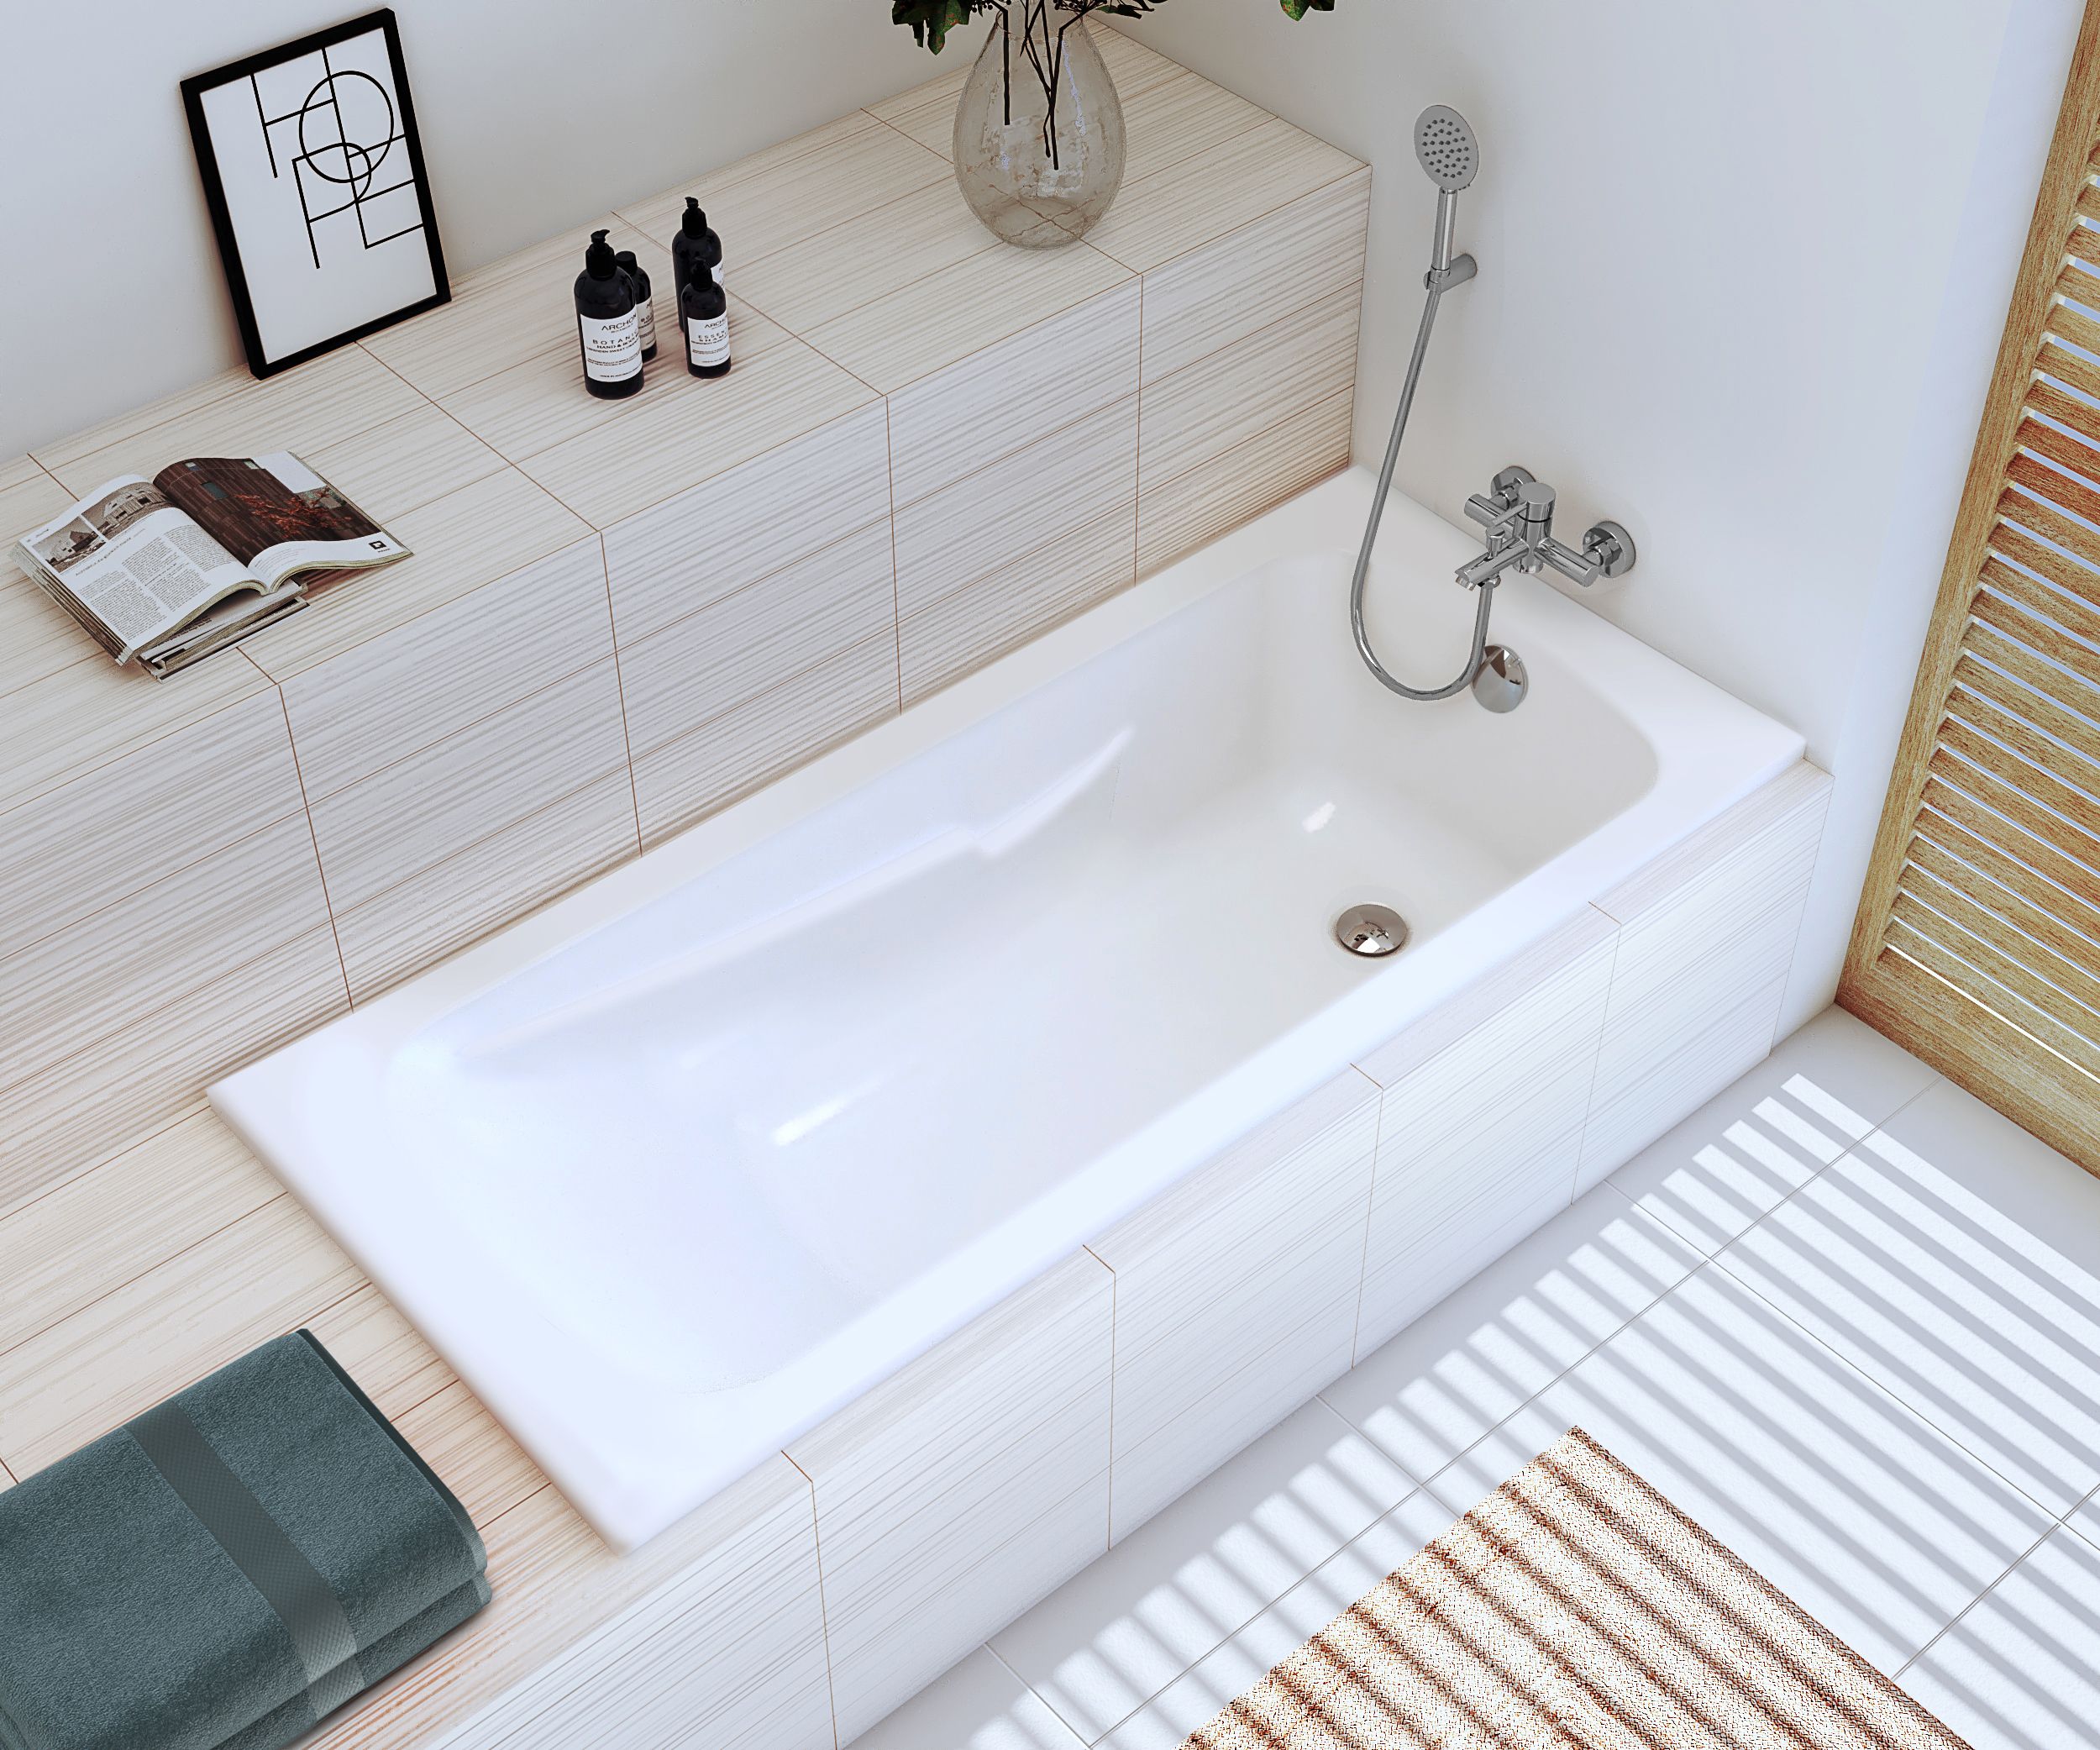  Rectangular bathtub